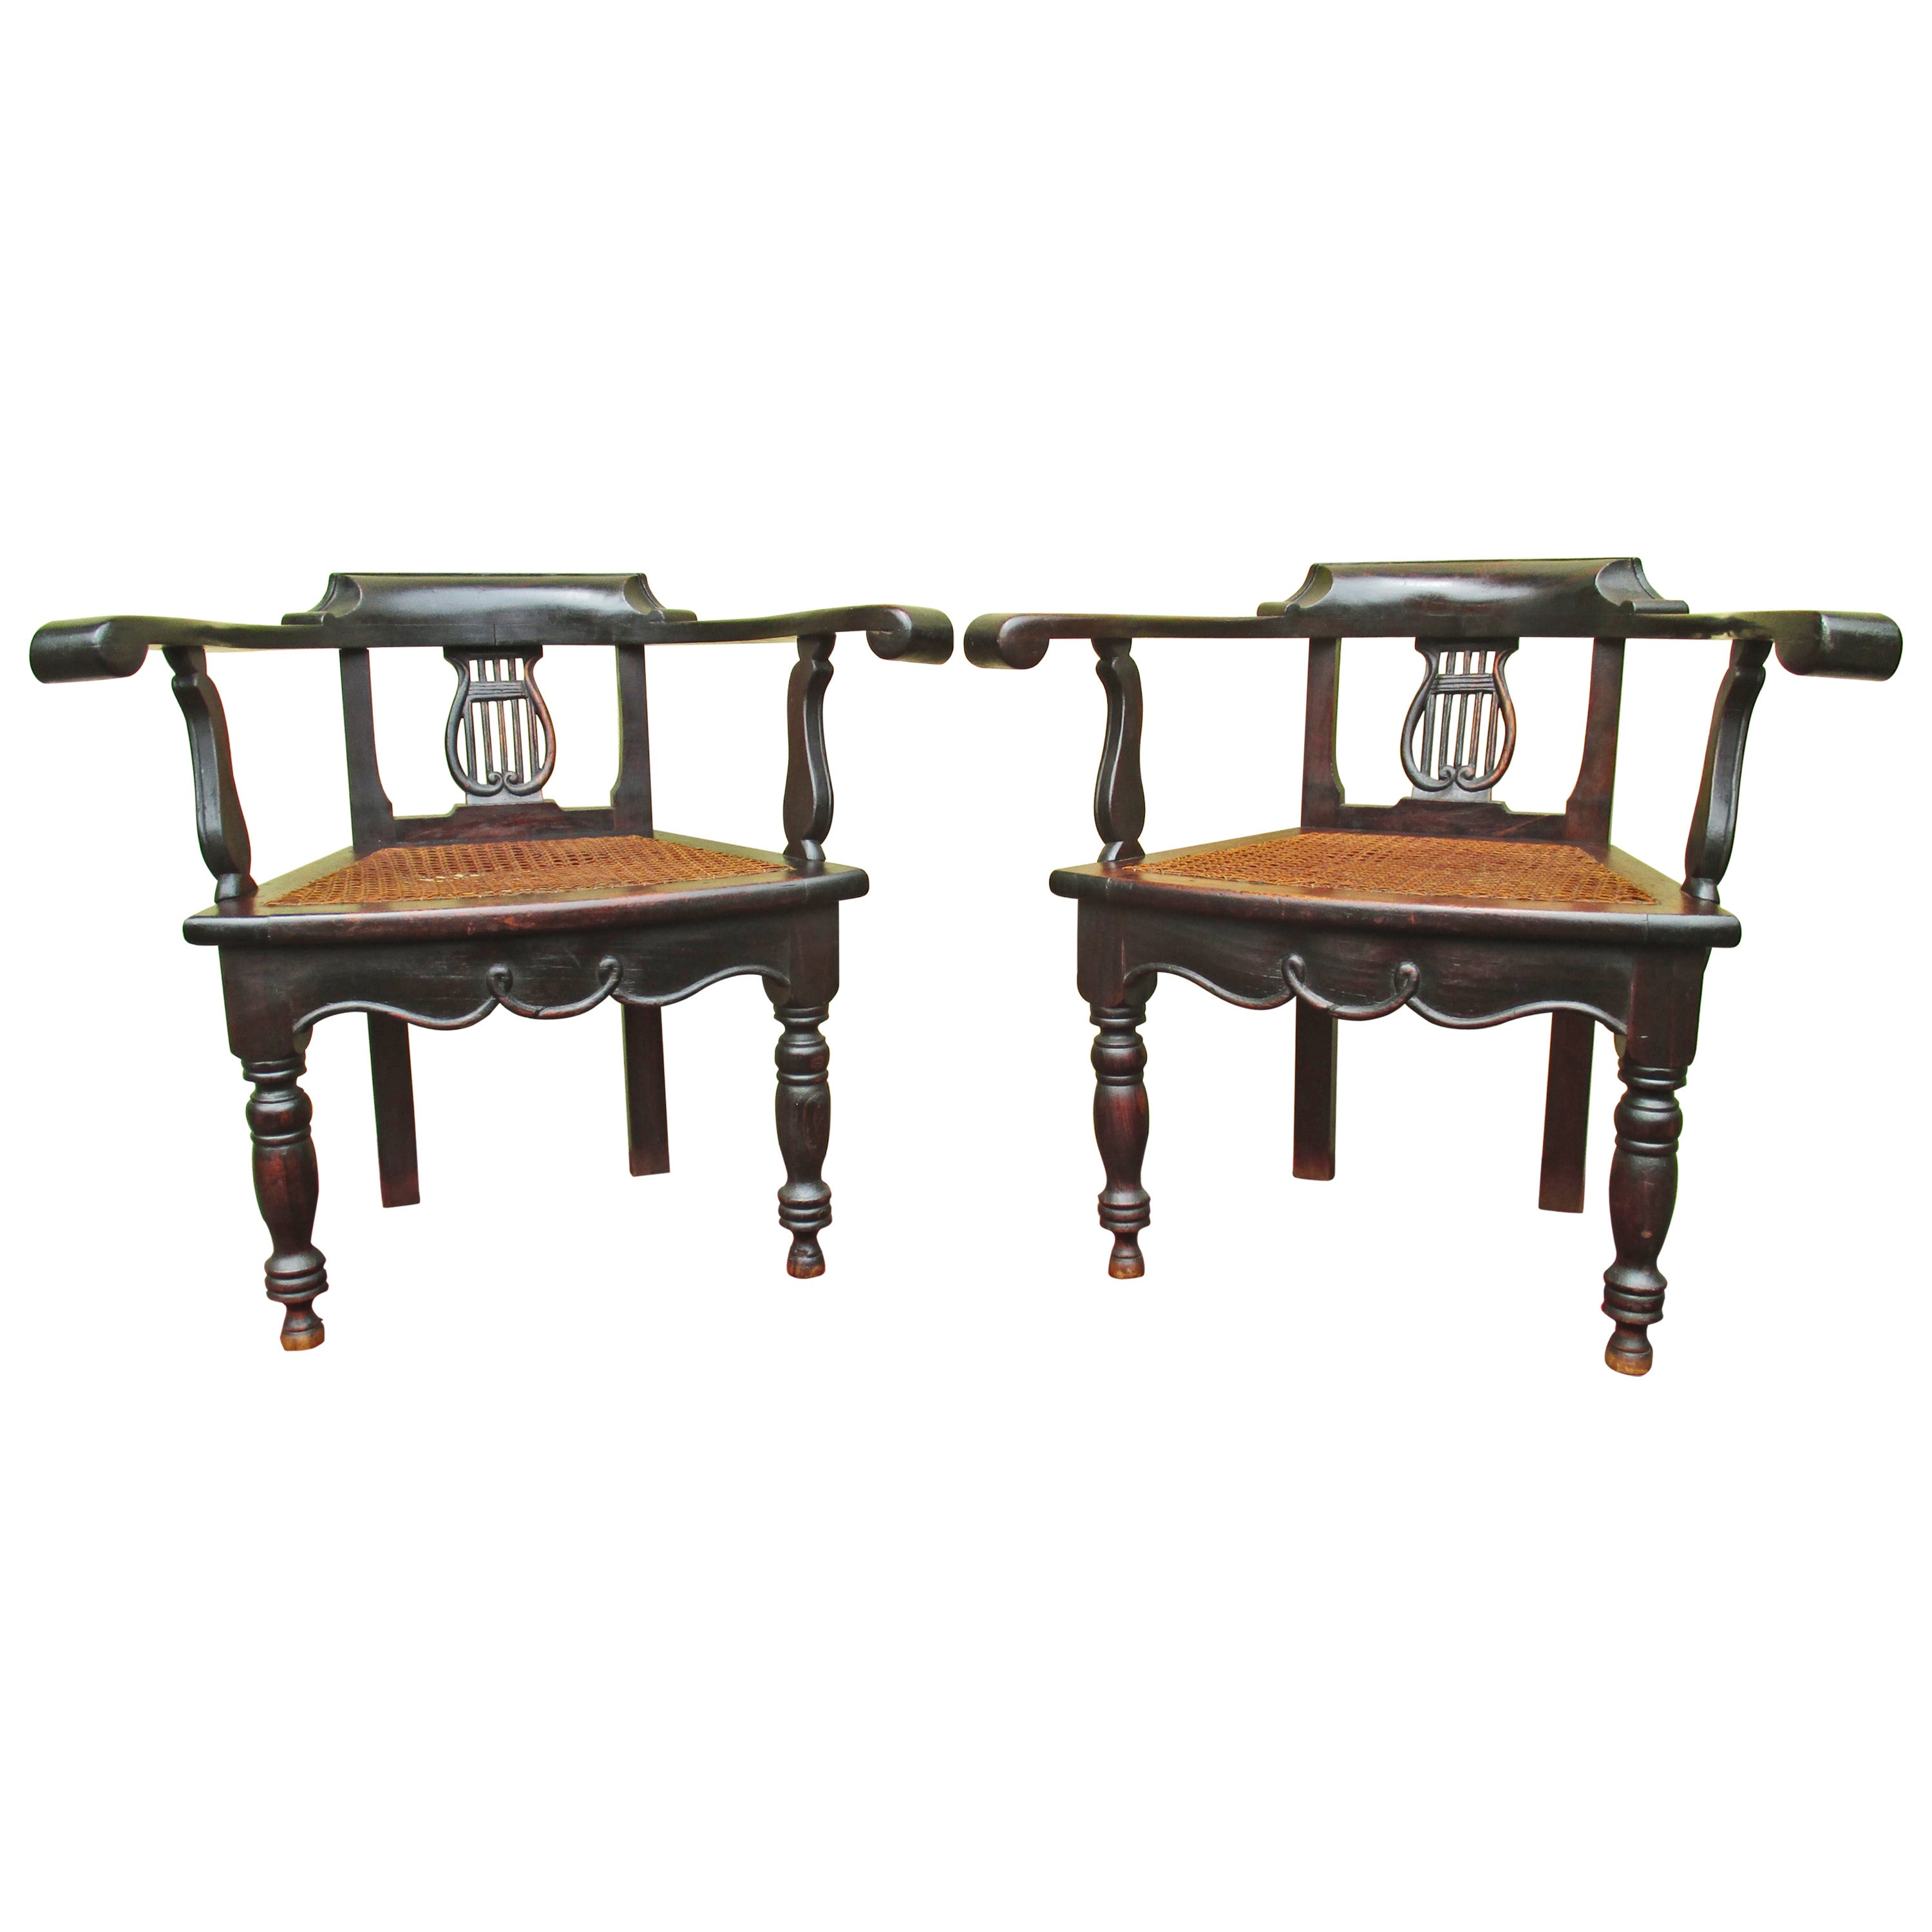 J. Leonardo Gaitan Spanish Colonial Chair Reproductions, Antigua, Guatemala For Sale